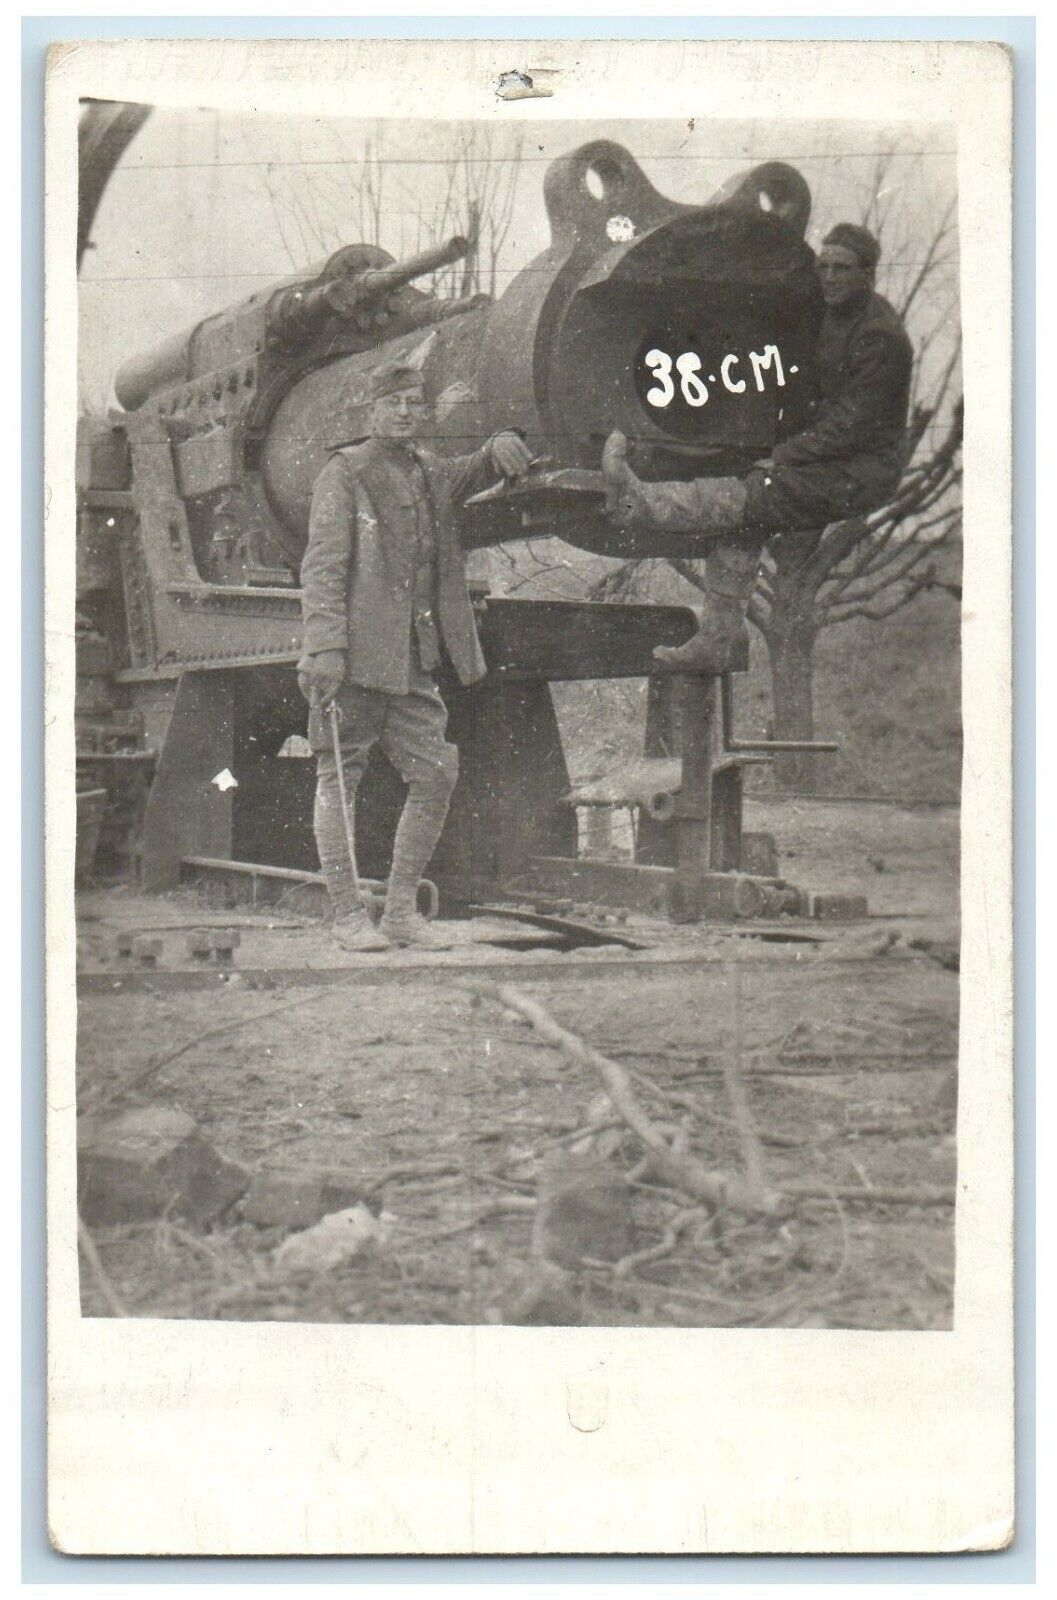 c1910's WWI 38cm Gun Military Soldier Europe RPPC Photo Antique Postcard